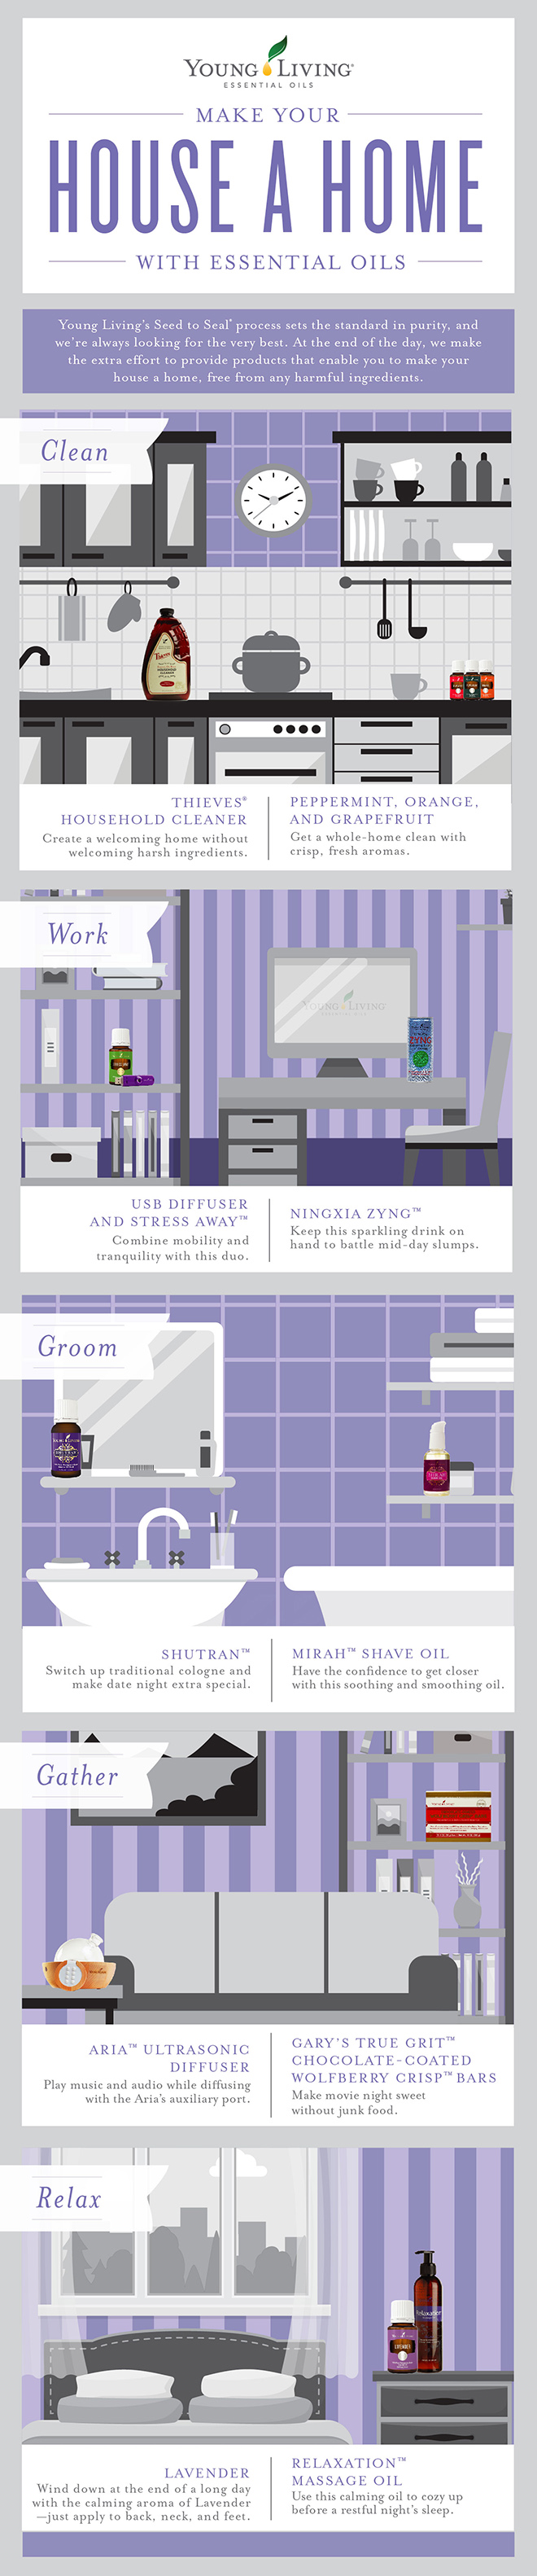 Make a House a Home Infographic